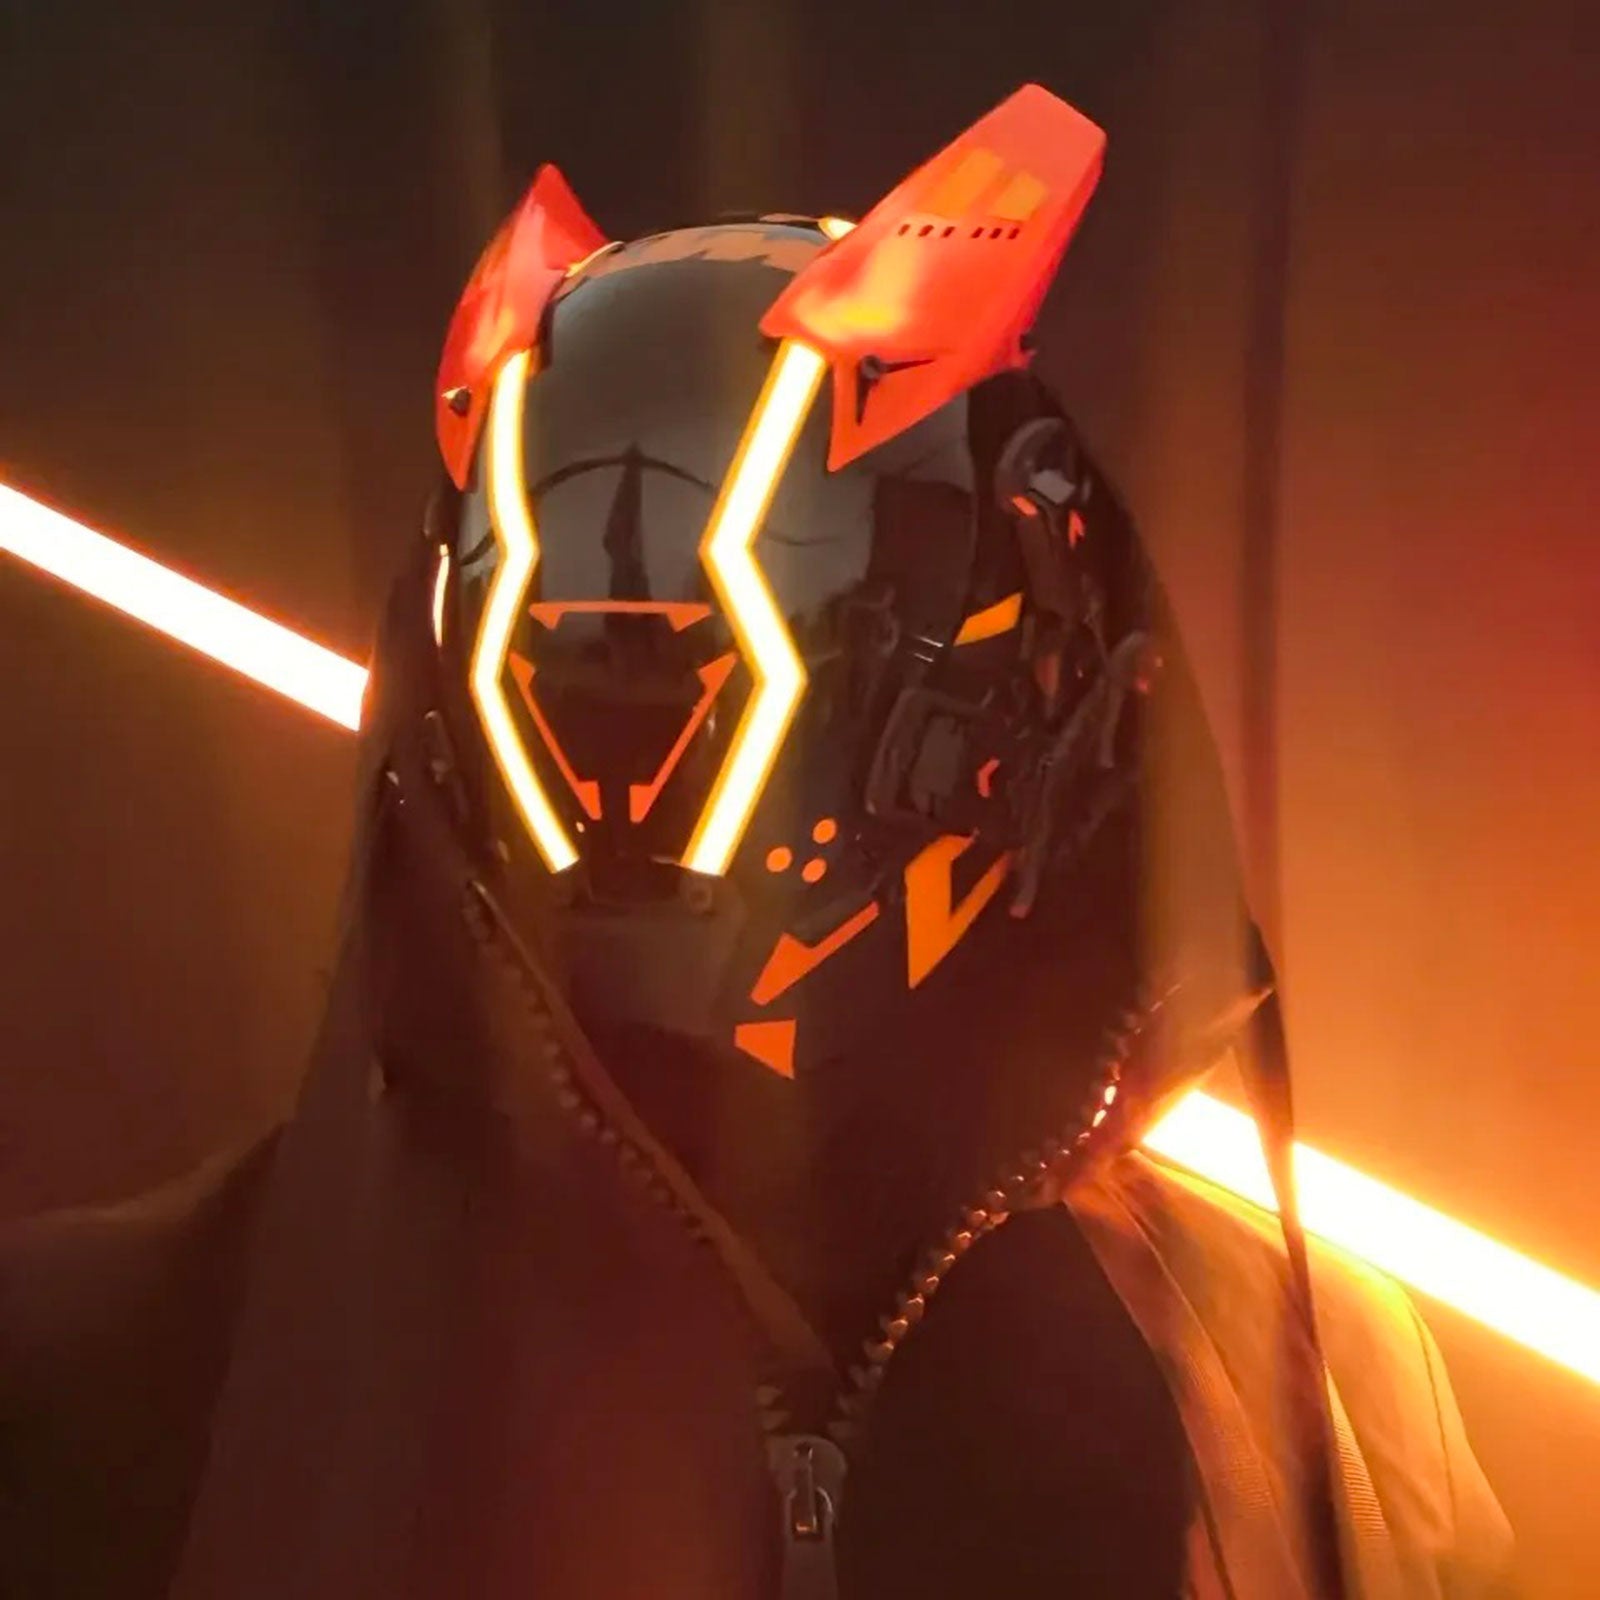 JAUPTO Cyberpunk Mask for Man Cosplay, Futuristic Cyberpunk Techwear,Cool Mask,Cosplay Helmet Face Costume Accessories, Black with LED Light